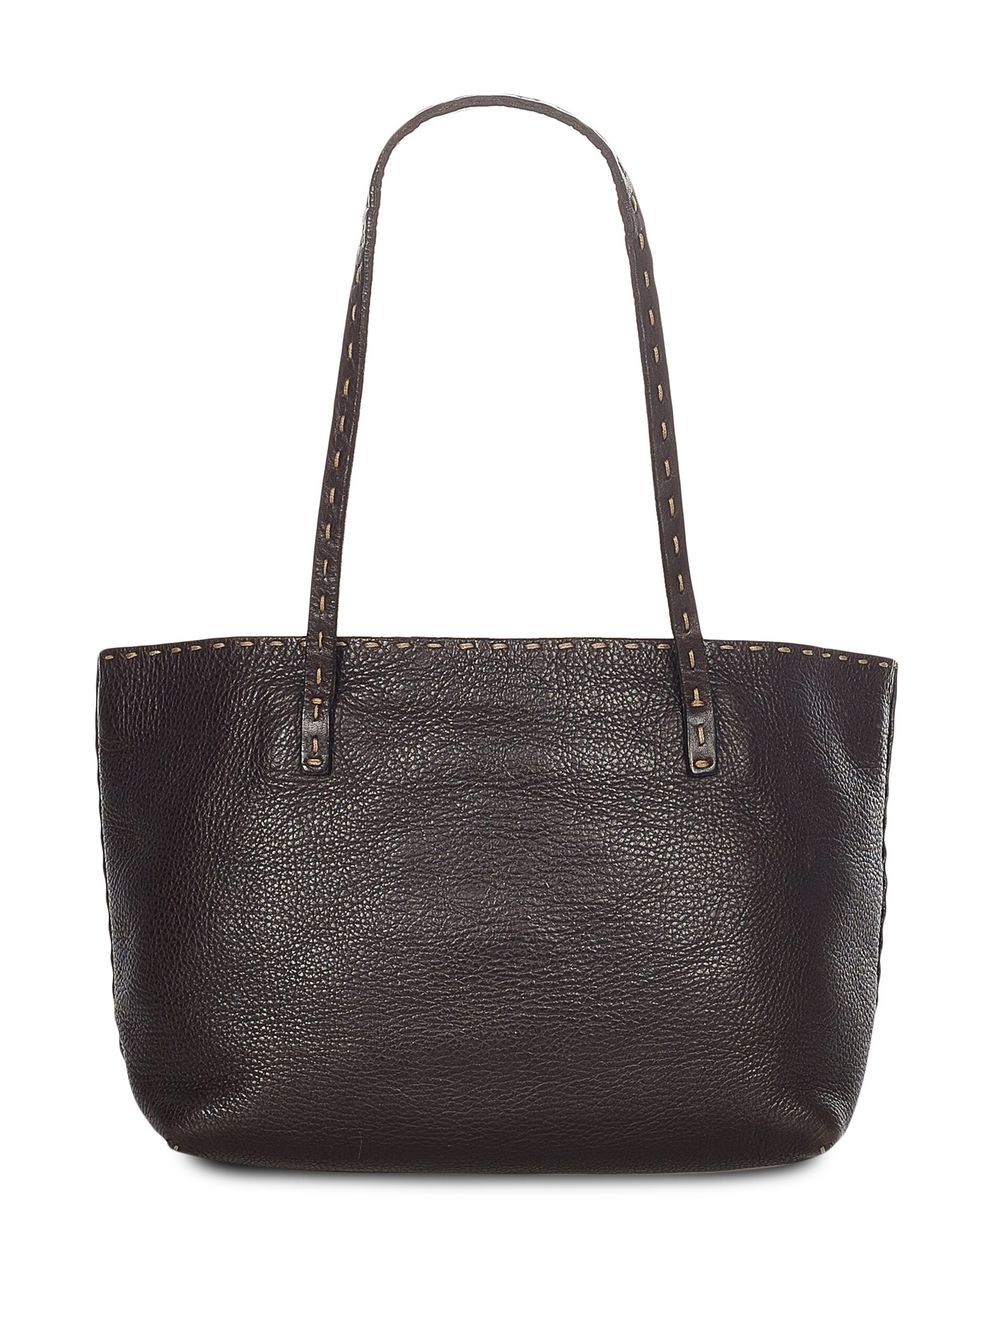 FENDI Vintage Black Selleria Handbag w/ Accent Stitching